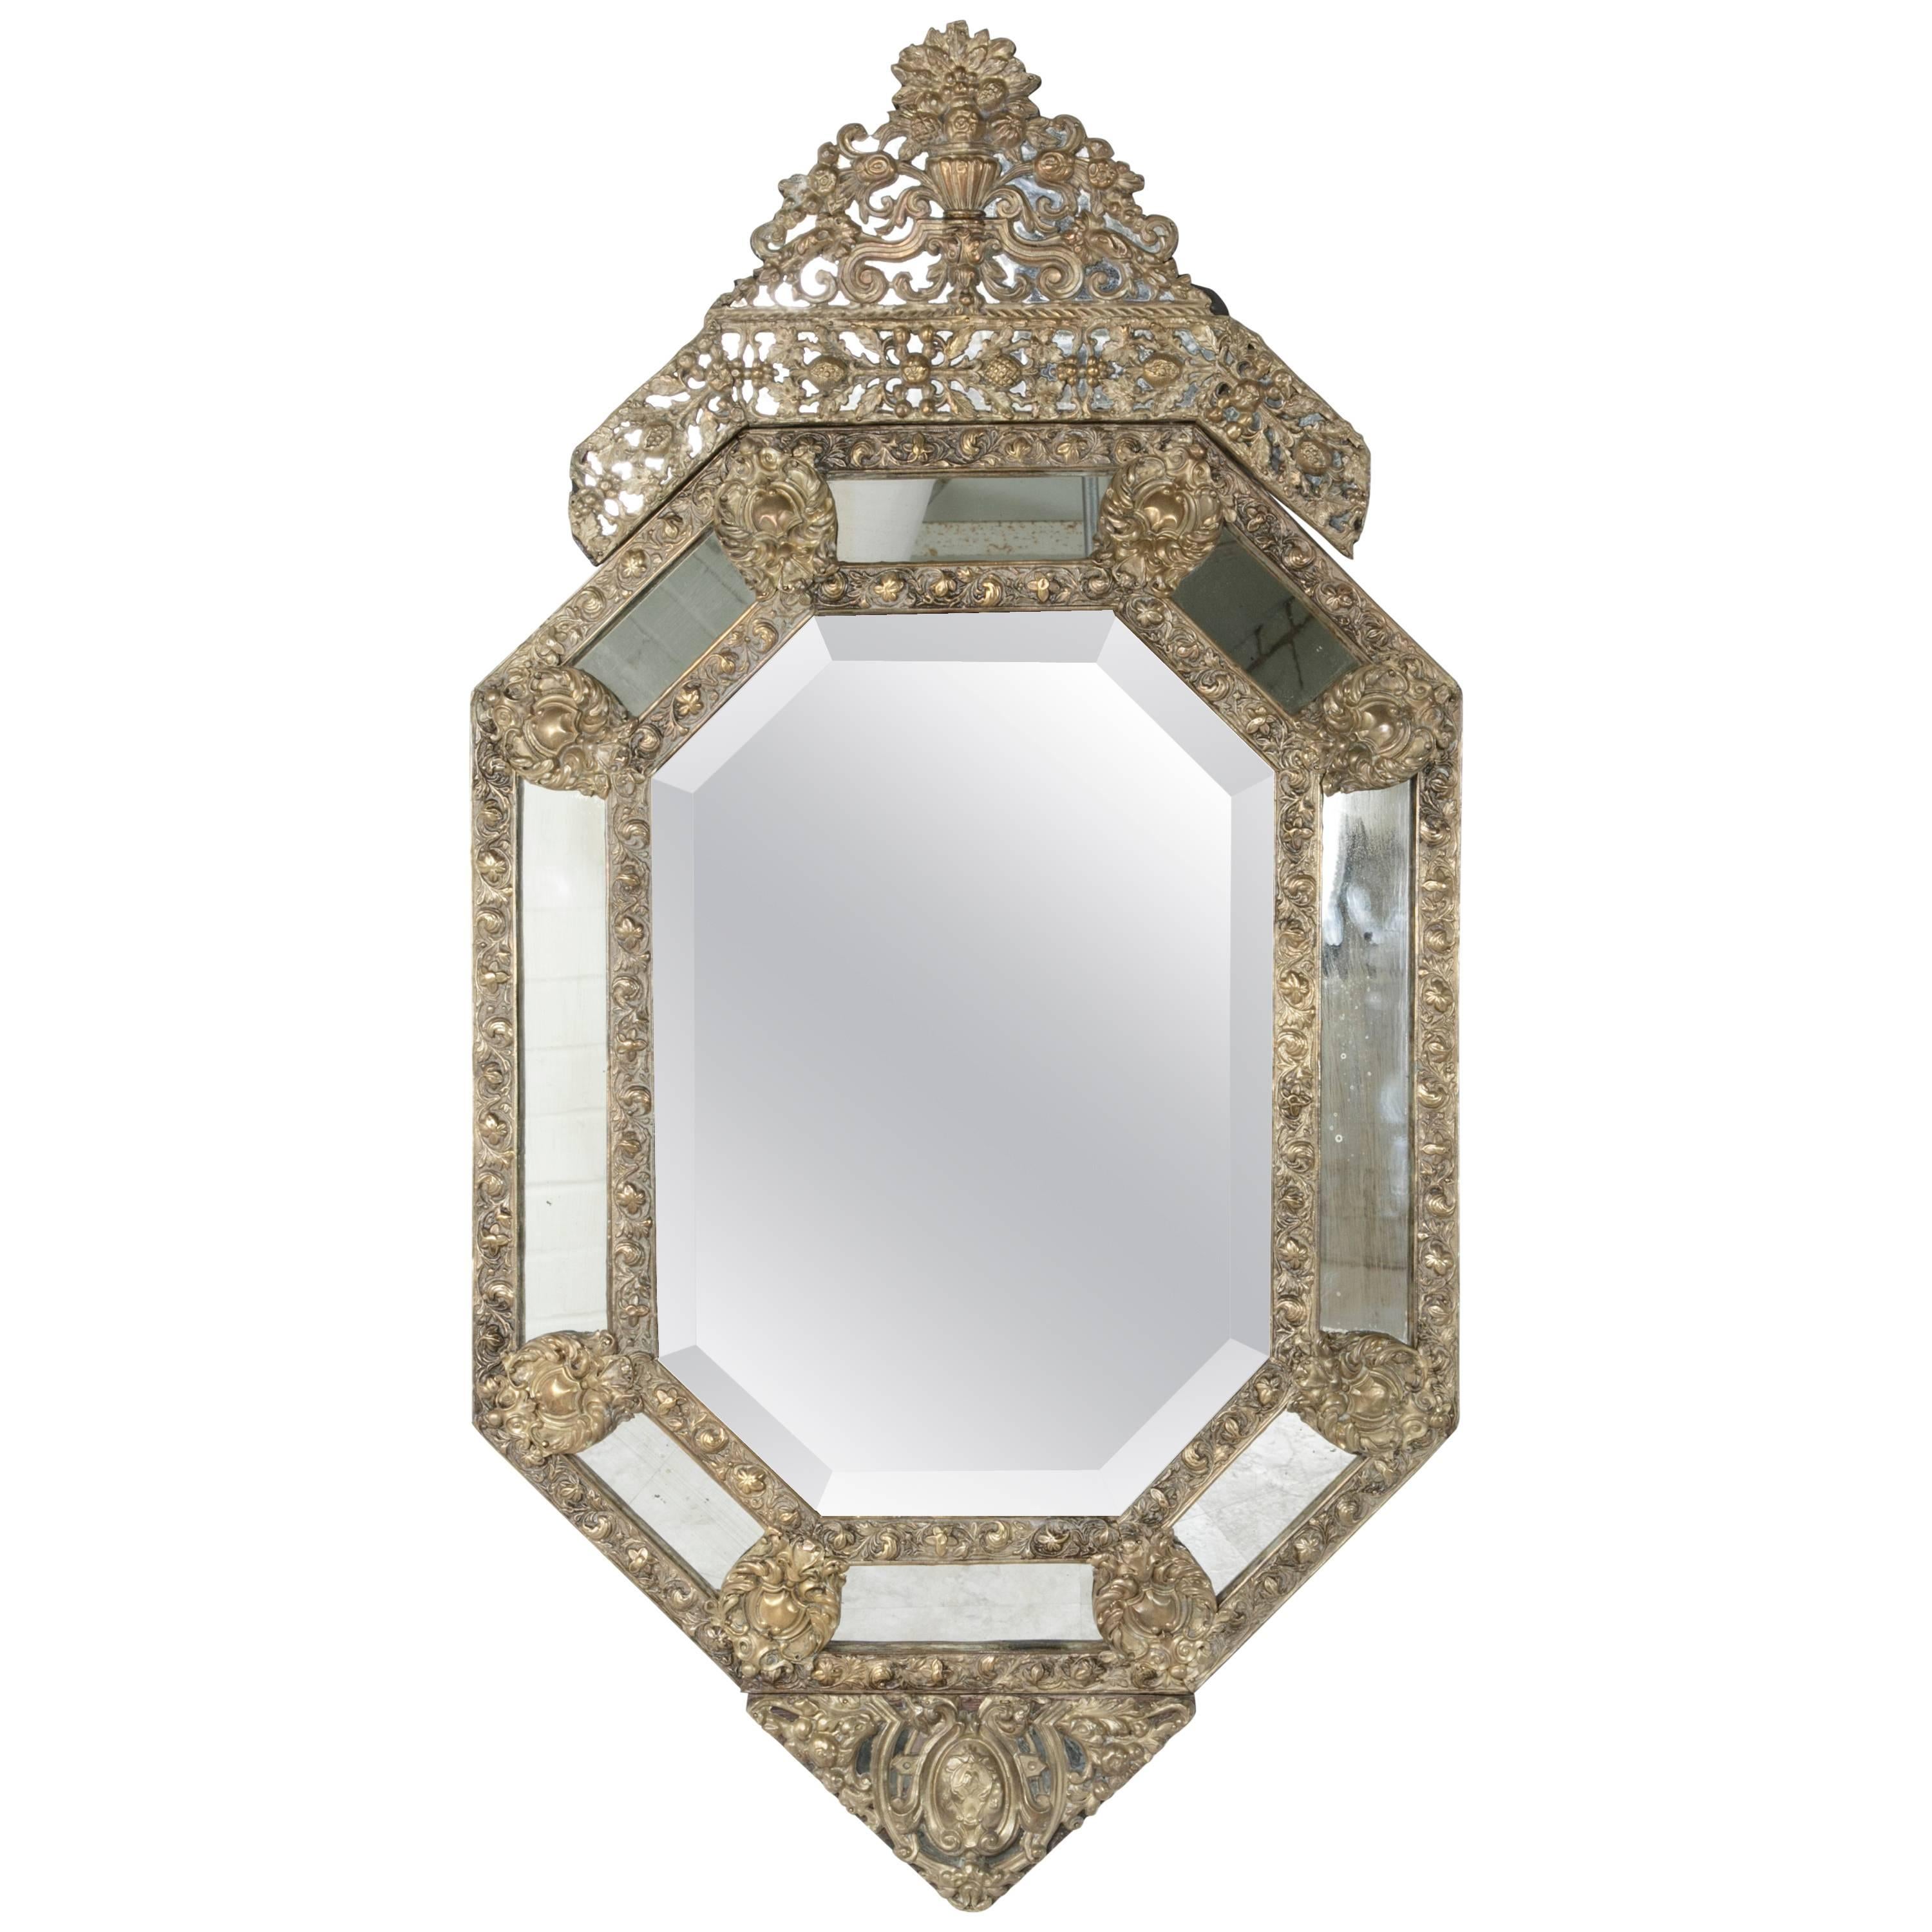 Large Napoleon III Period Bronze Repoussé Cushion Mirror with Octagonal Frame